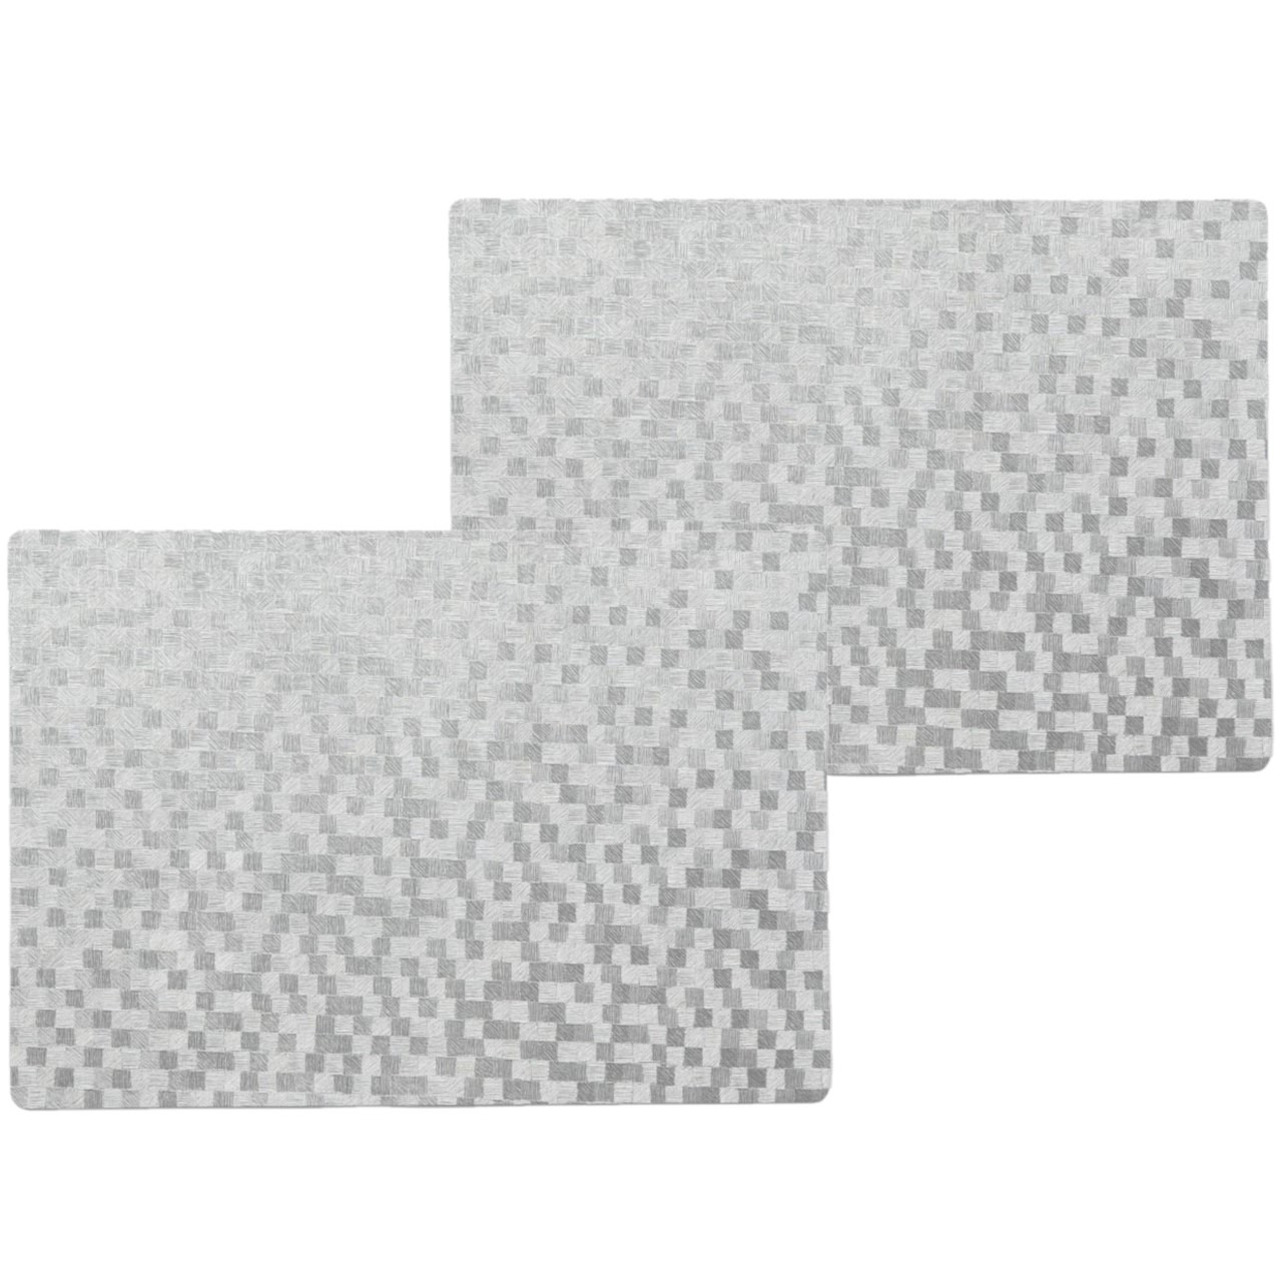 Wicotex 12x stuks stevige luxe Tafel placemats Stones zilver 30 x 43 cm -